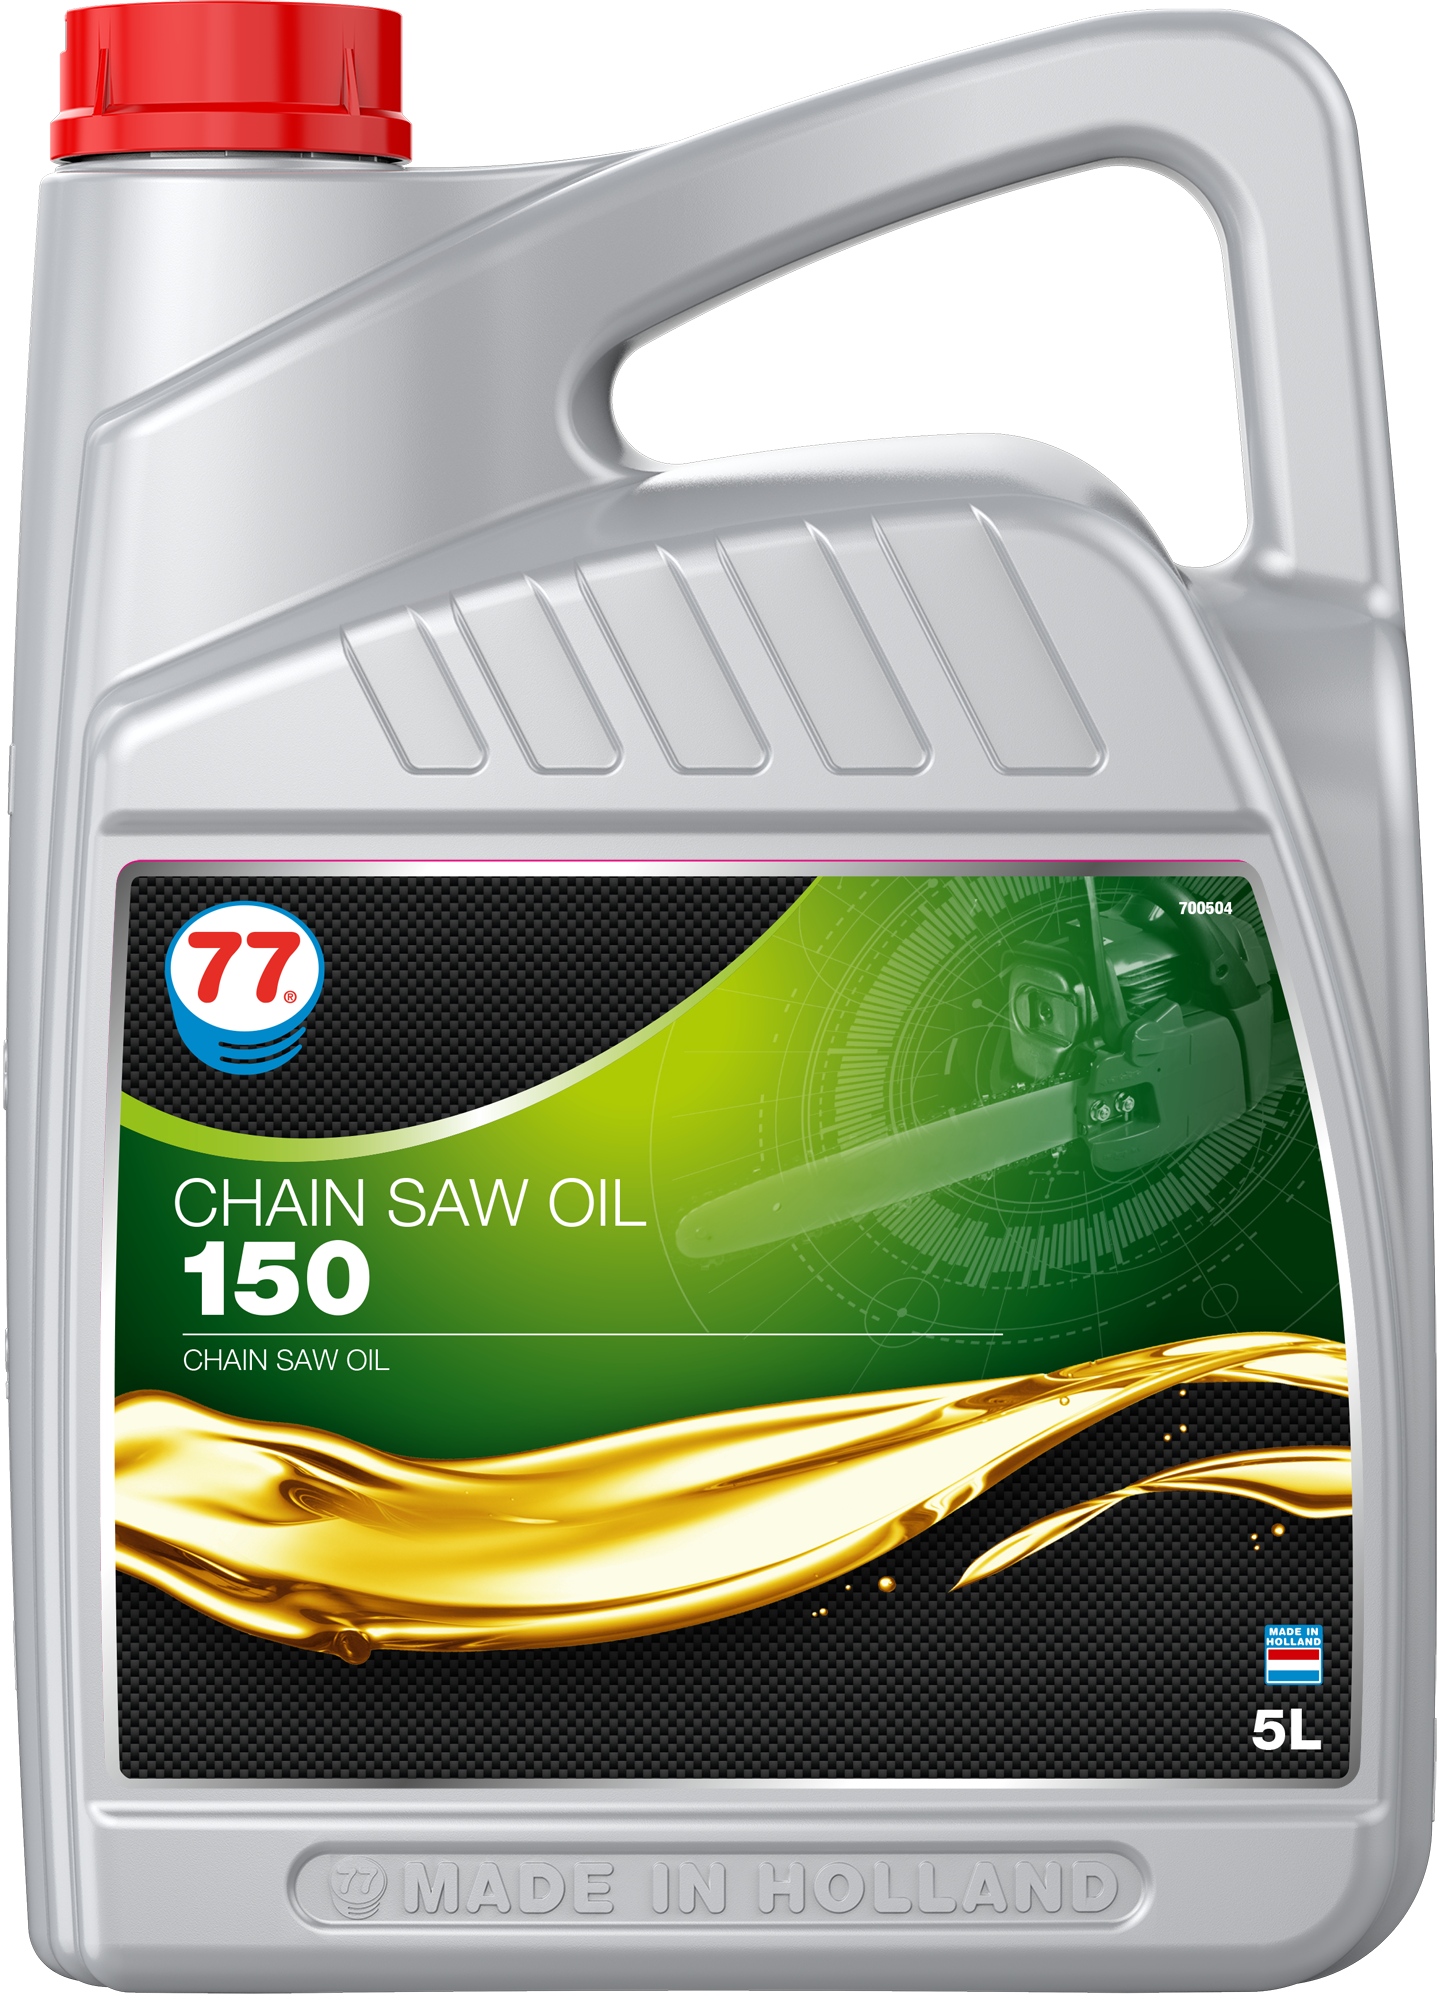 4388-5 Chain Saw Oil 150 van 77 lubricants is een olie van hoge kwaliteit die speciaal is ontwikkeld om de ketting van kettingzagen te smeren.